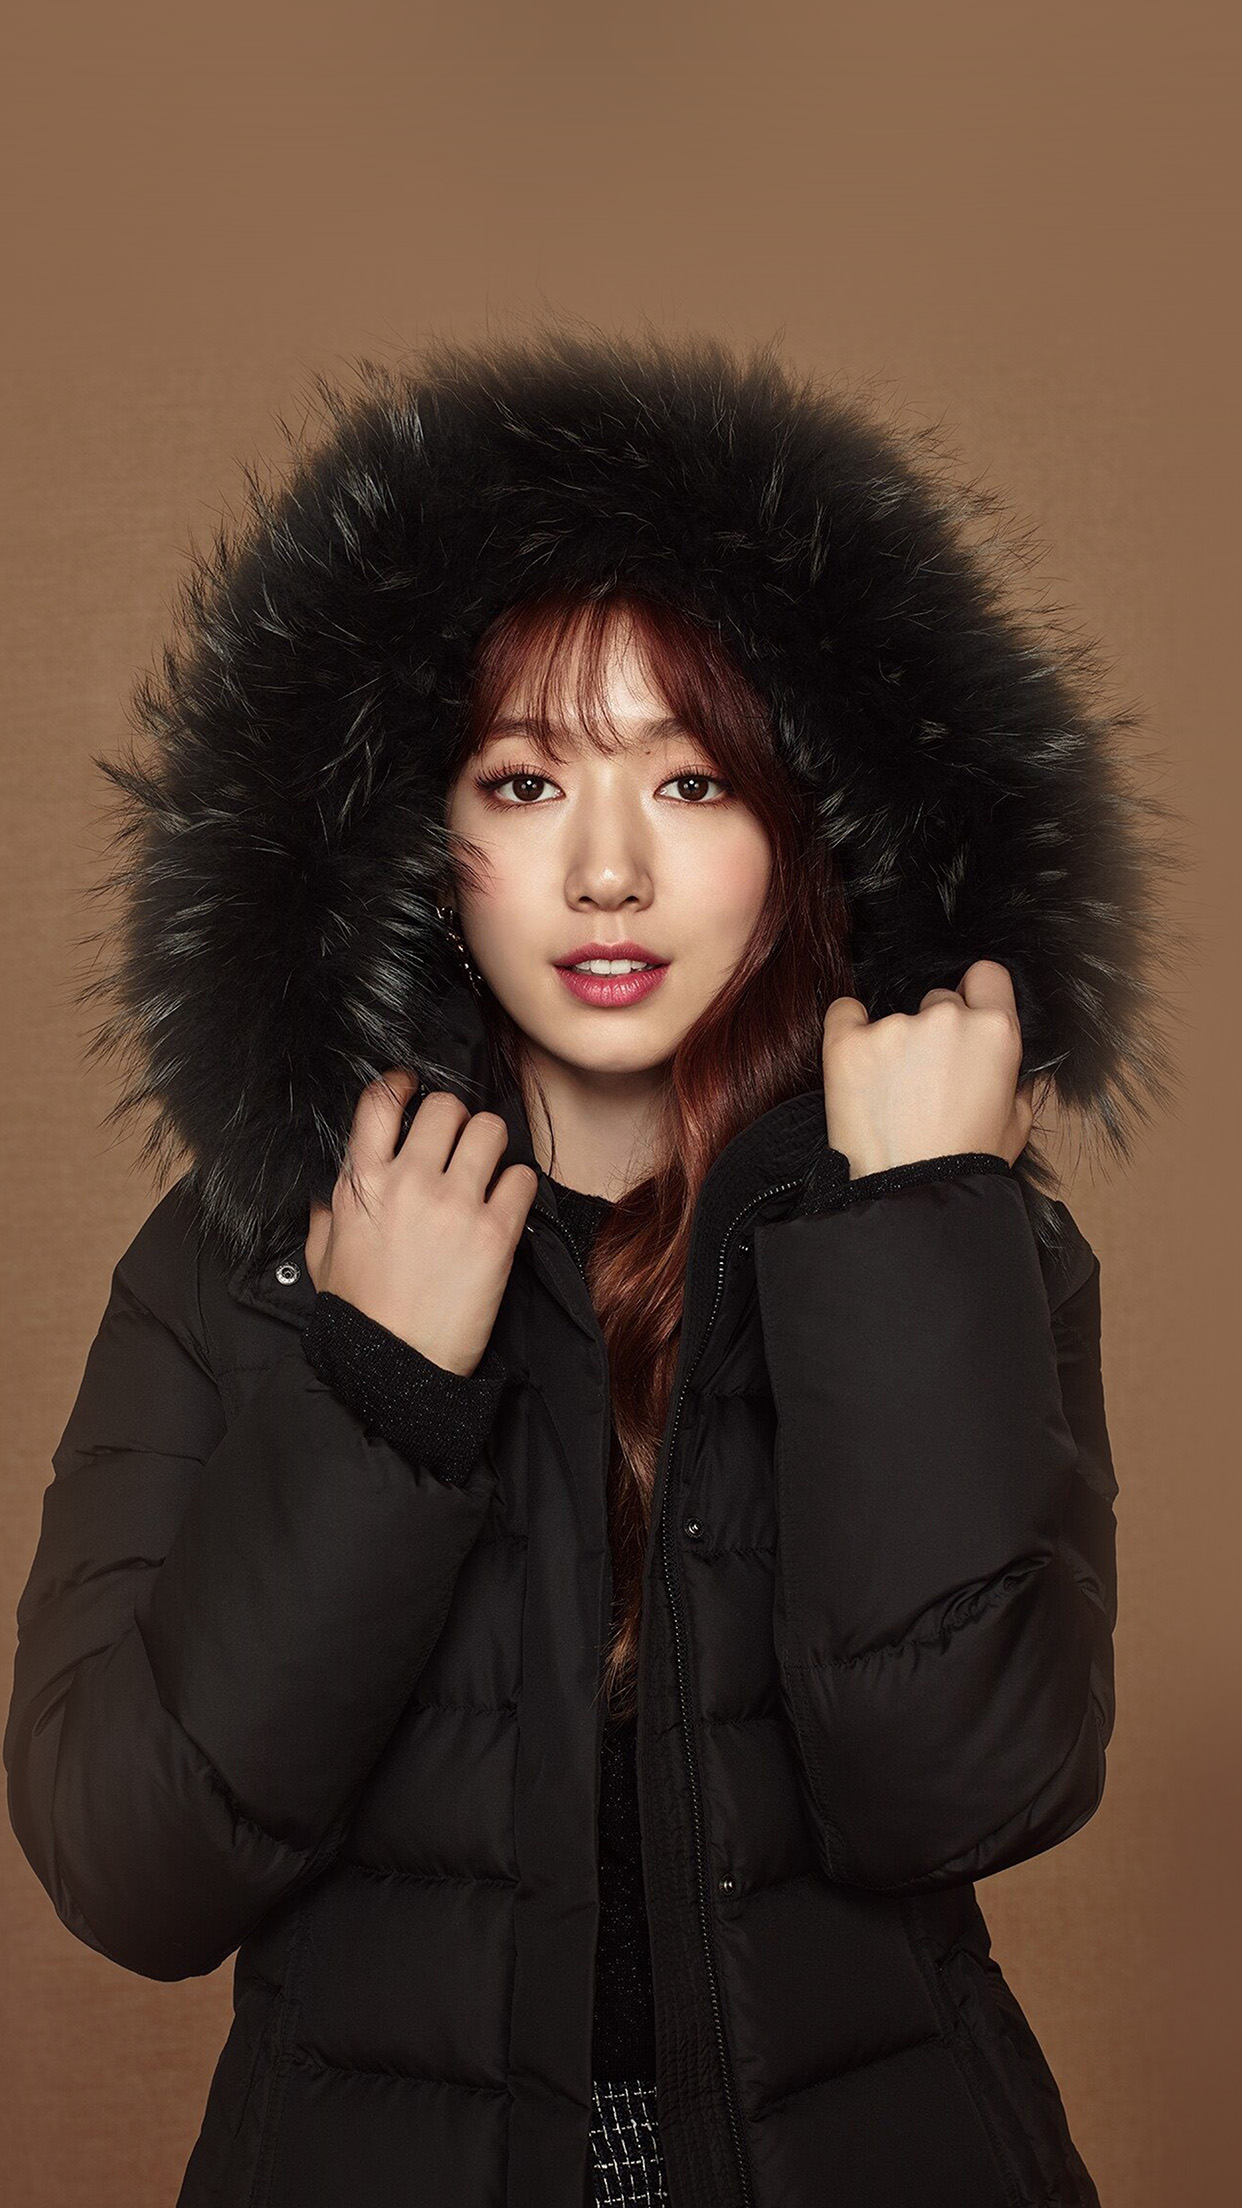 Kpop Girl Shinhye Asian Android wallpaper